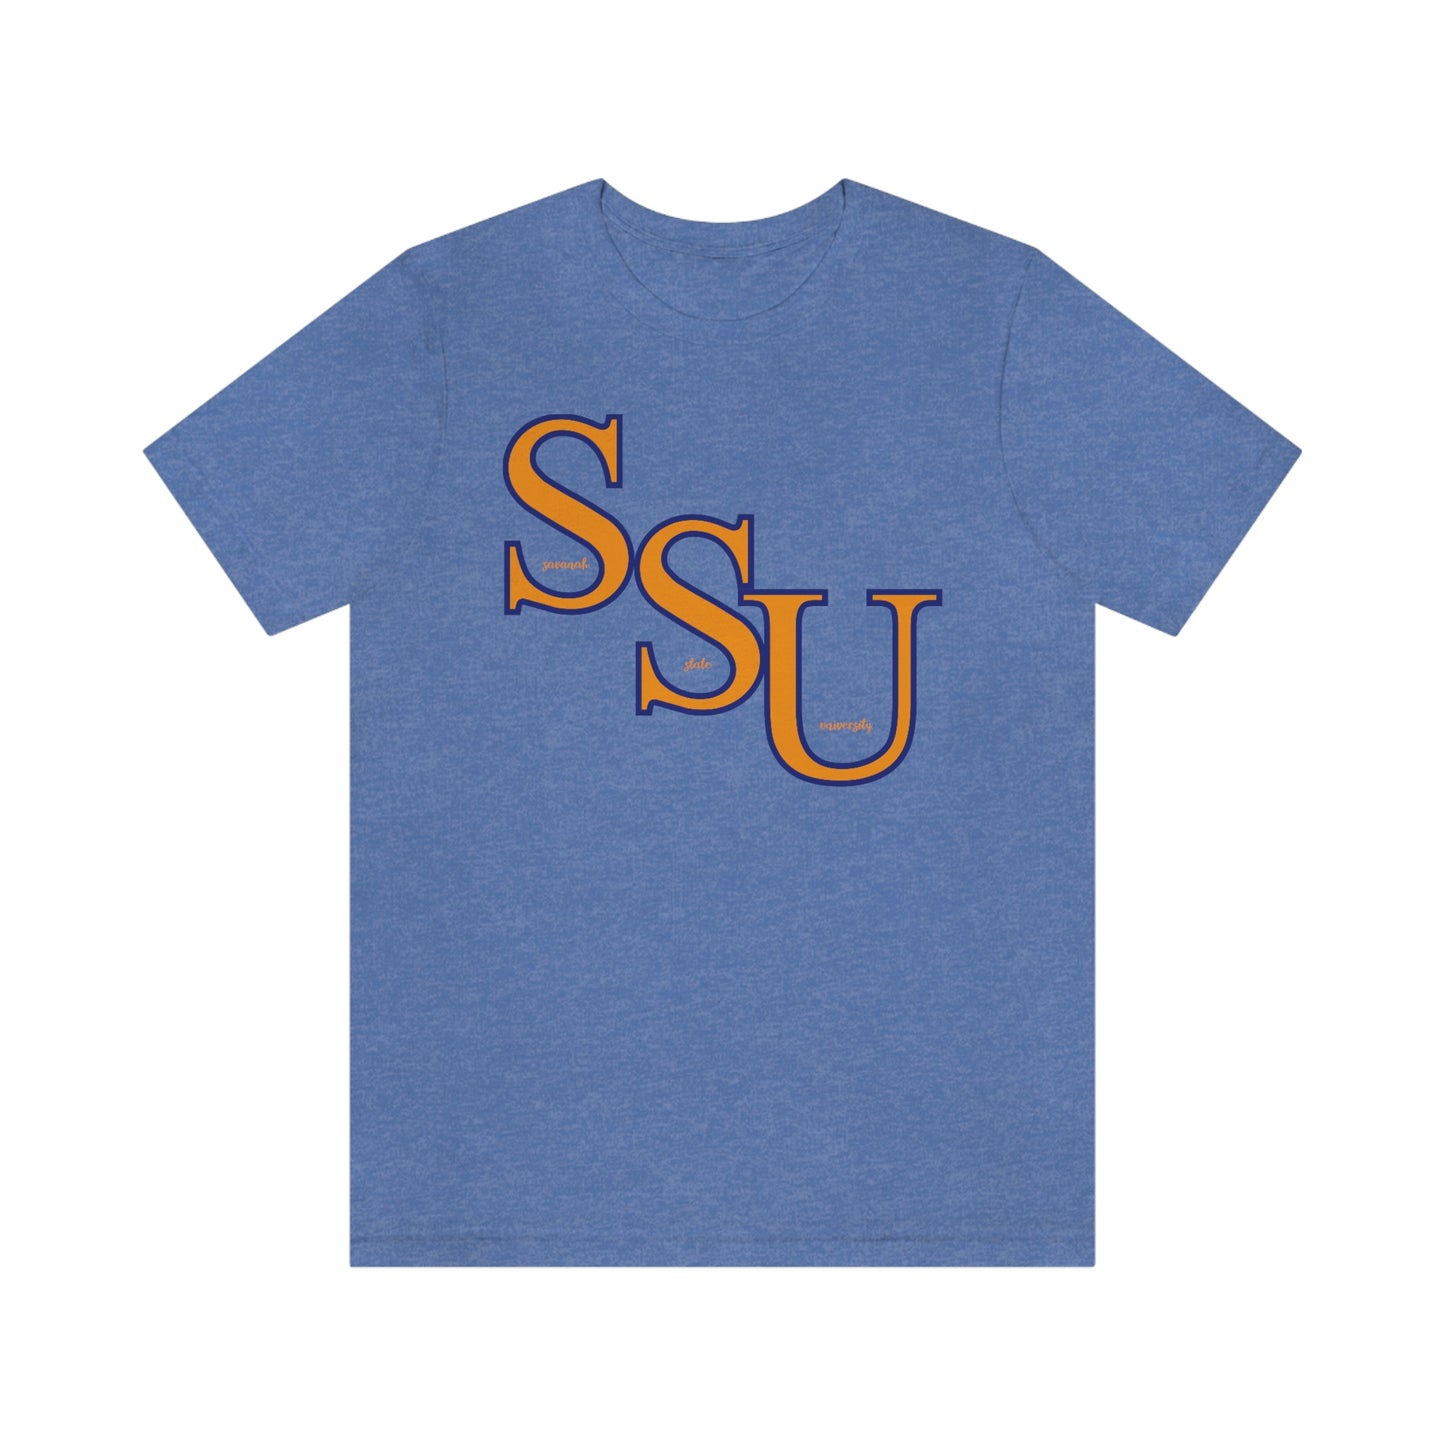 HBCU Love (Savannah State University/ SSU Unisex Jersey Short Sleeve Tee)